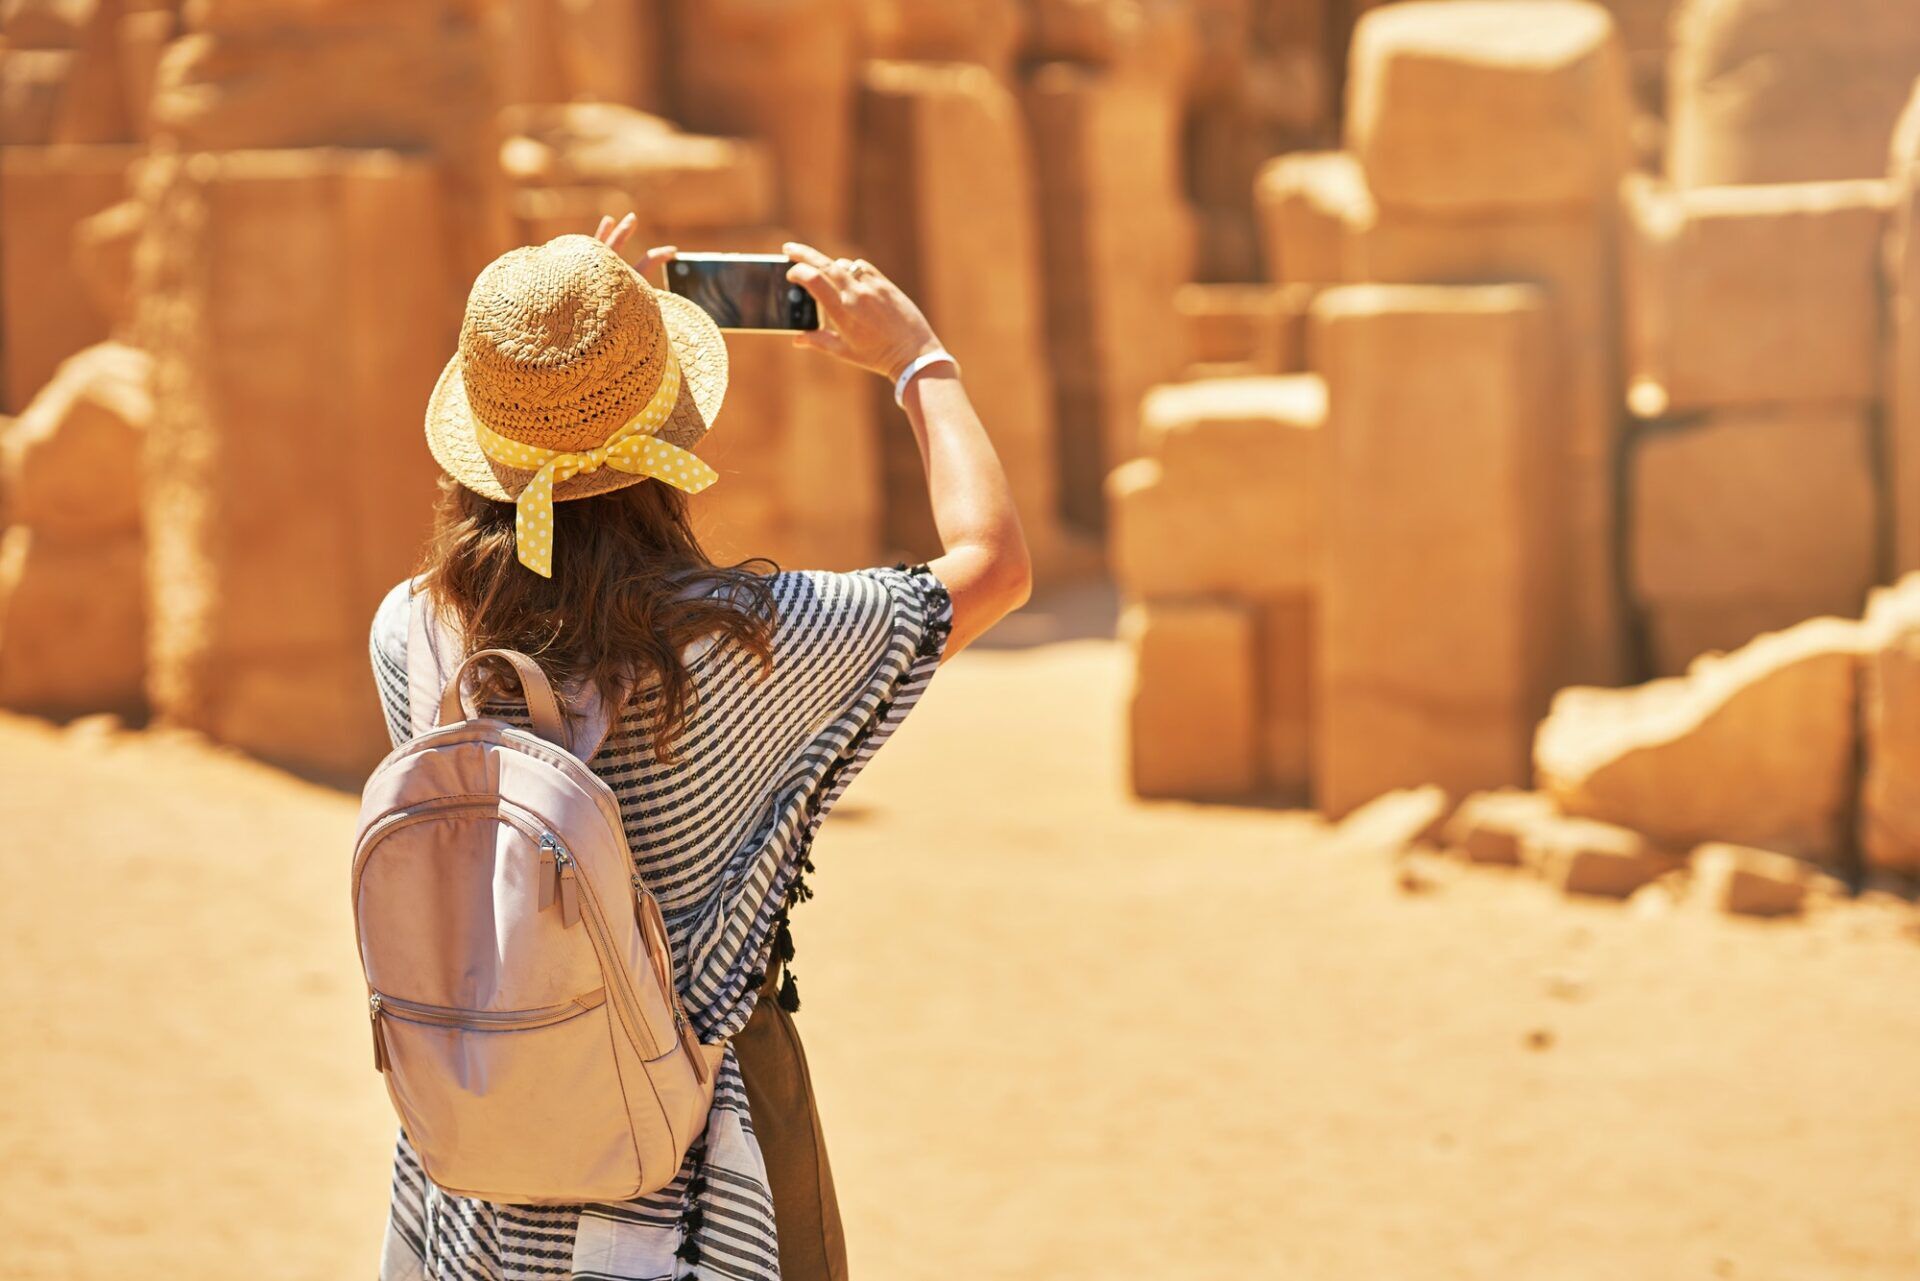 Tourist woman in Karnak Temple in Luxor Egypt